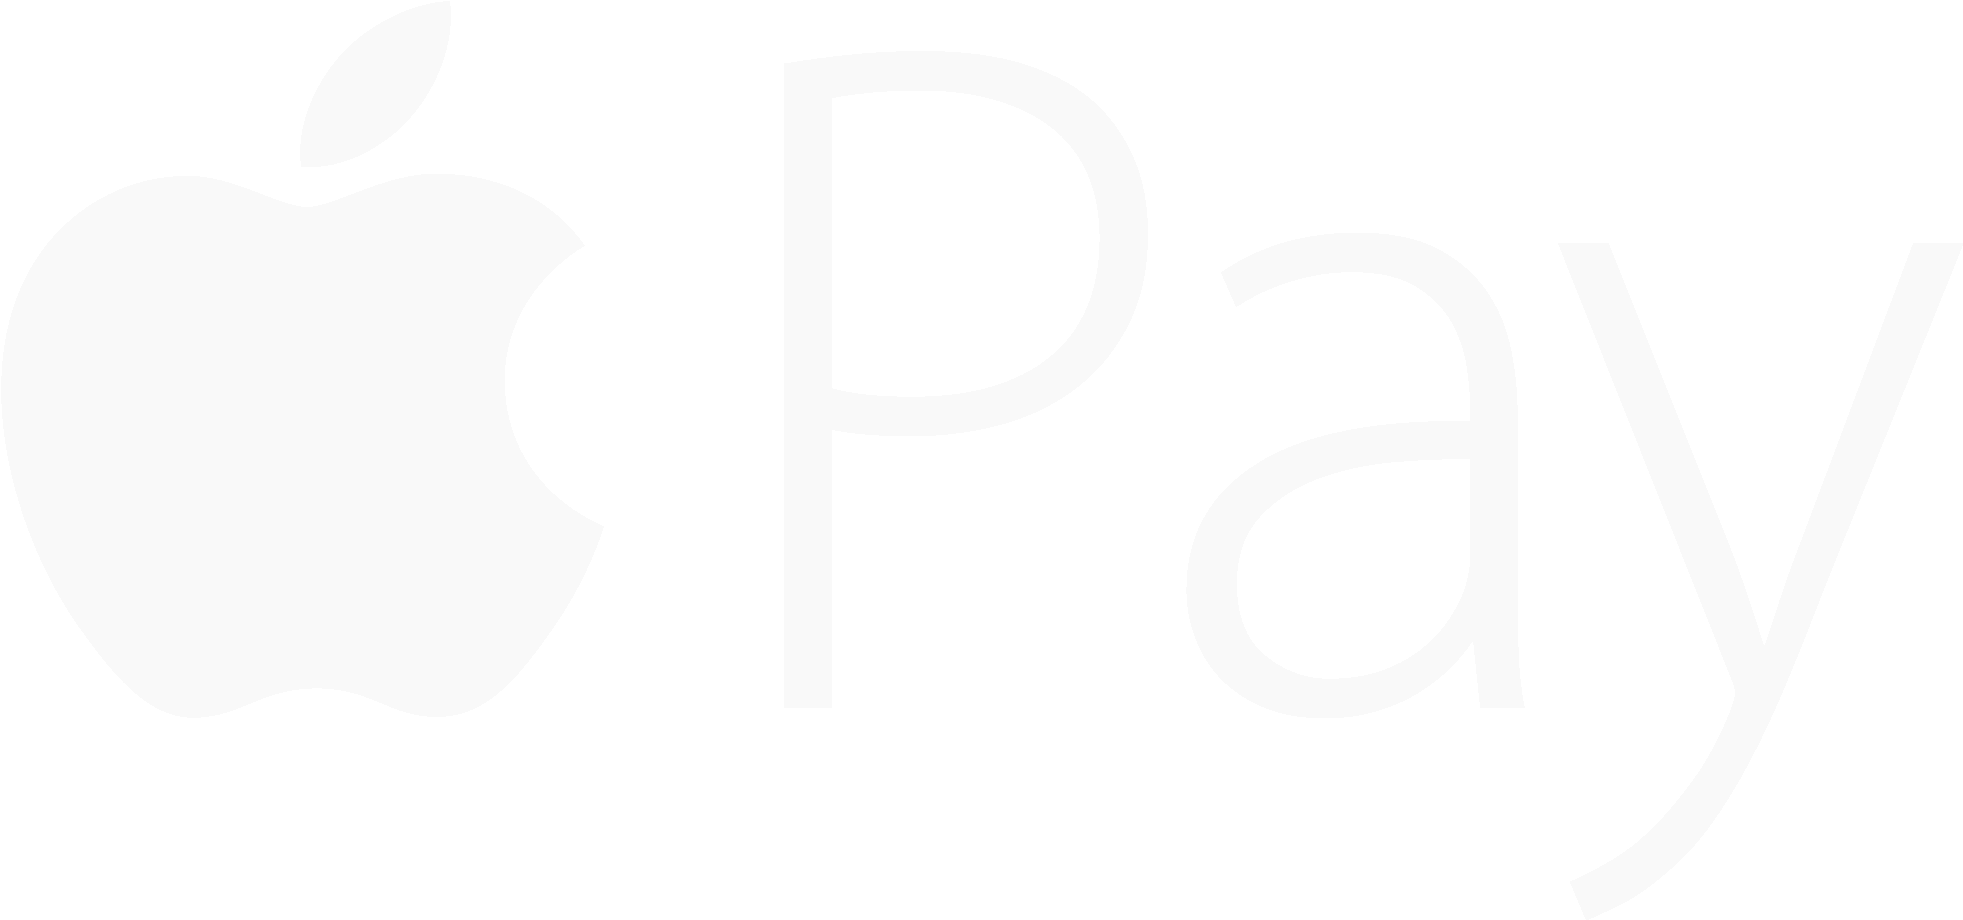 Apple Pay Logo PNG Image File